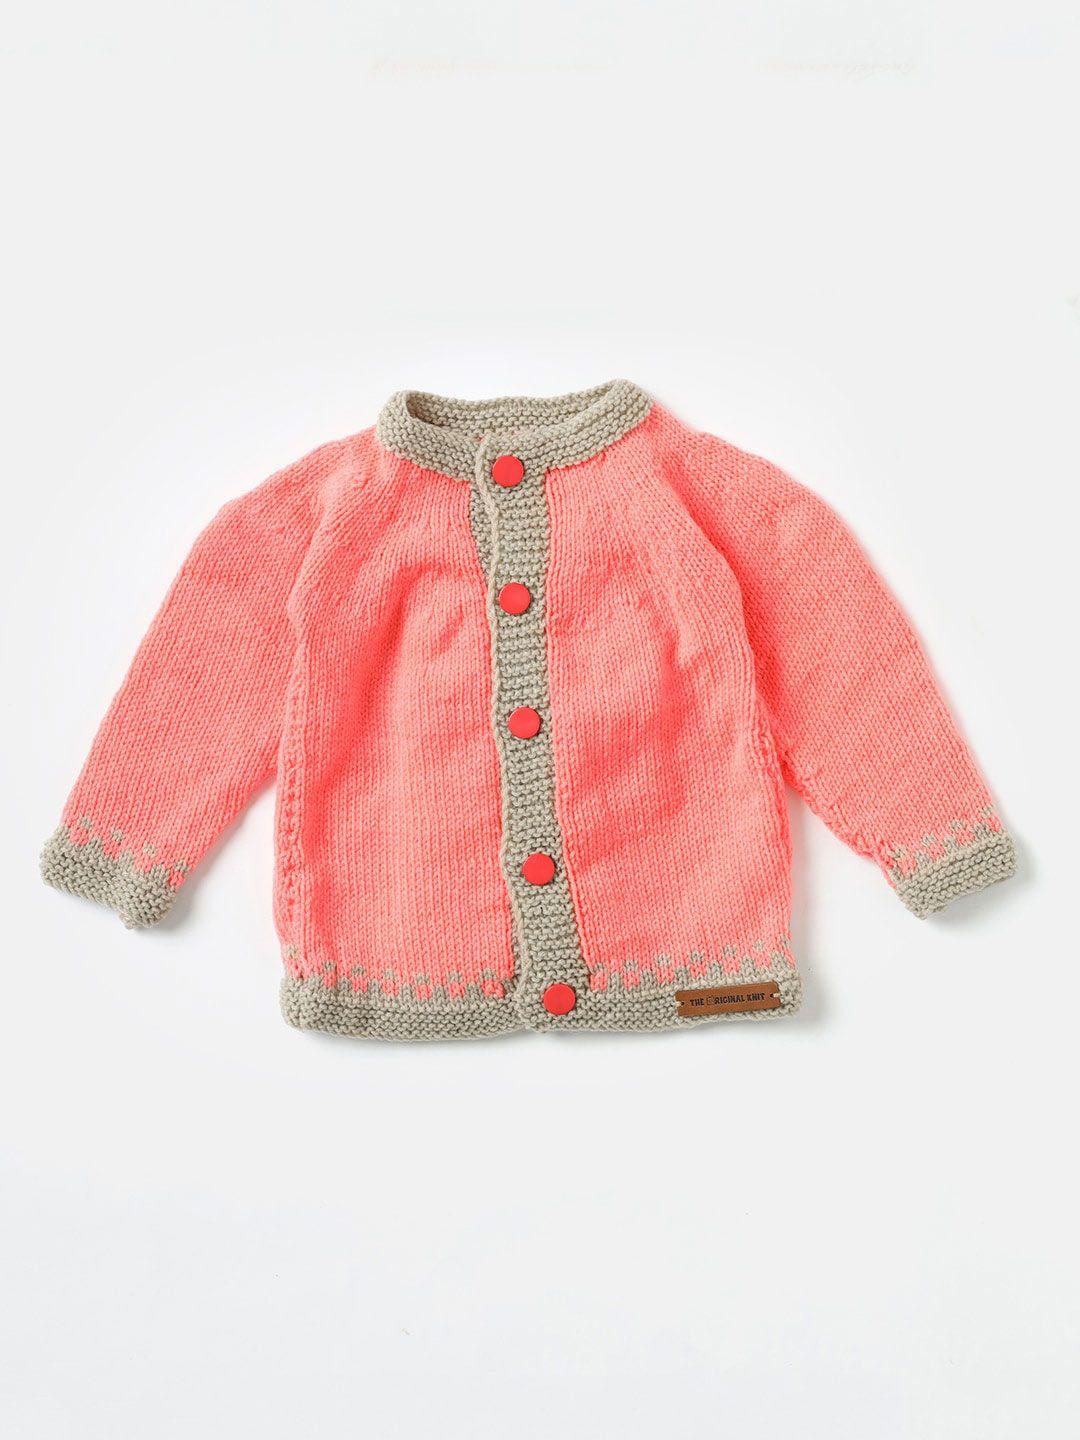 the original knit unisex kids peach-coloured & grey cardigan